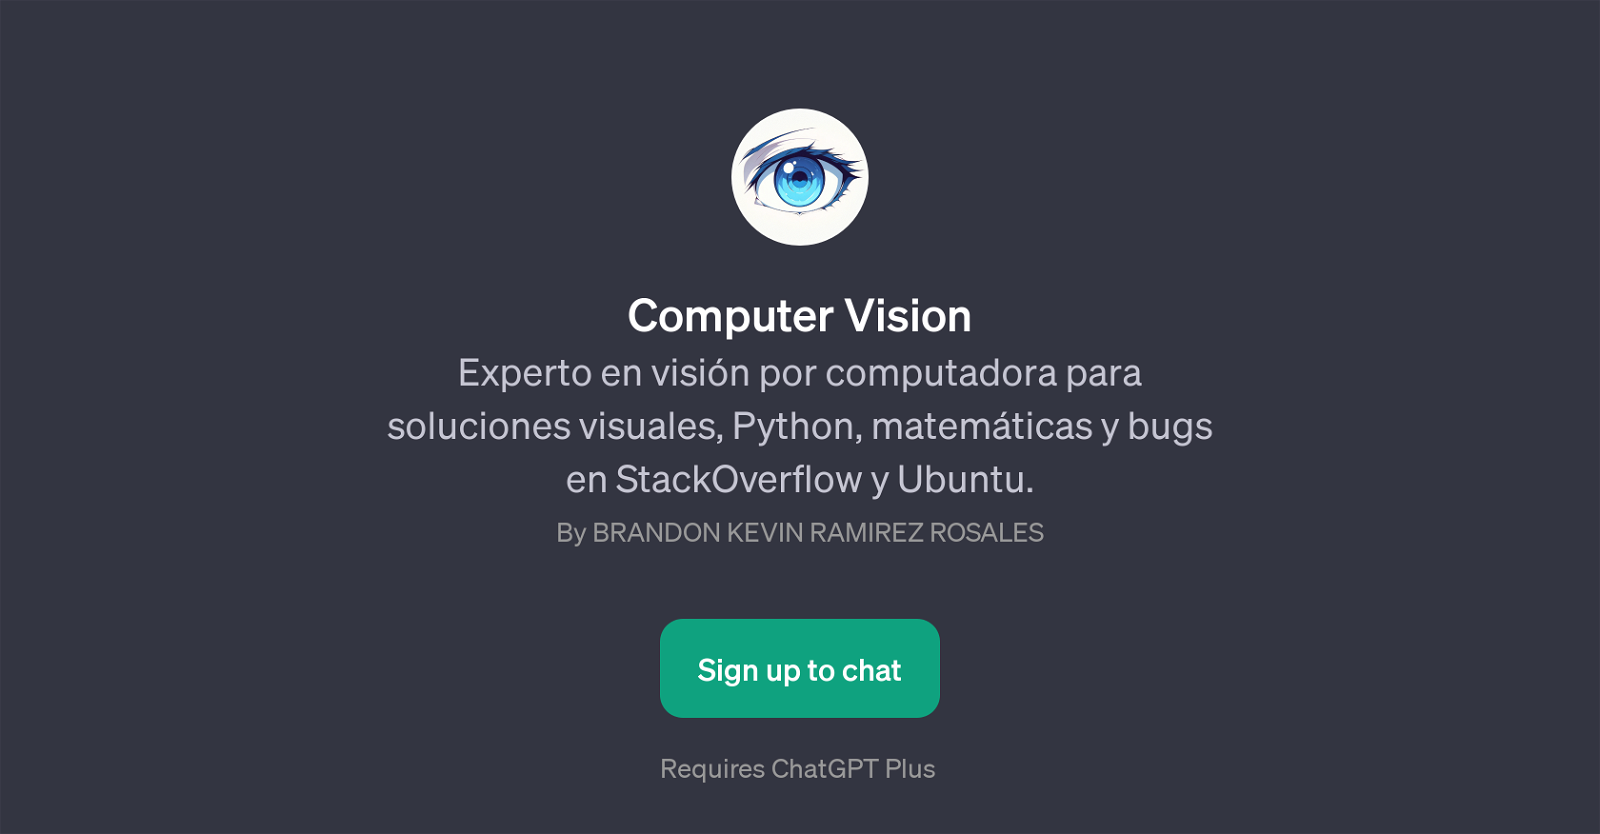 Computer Vision website